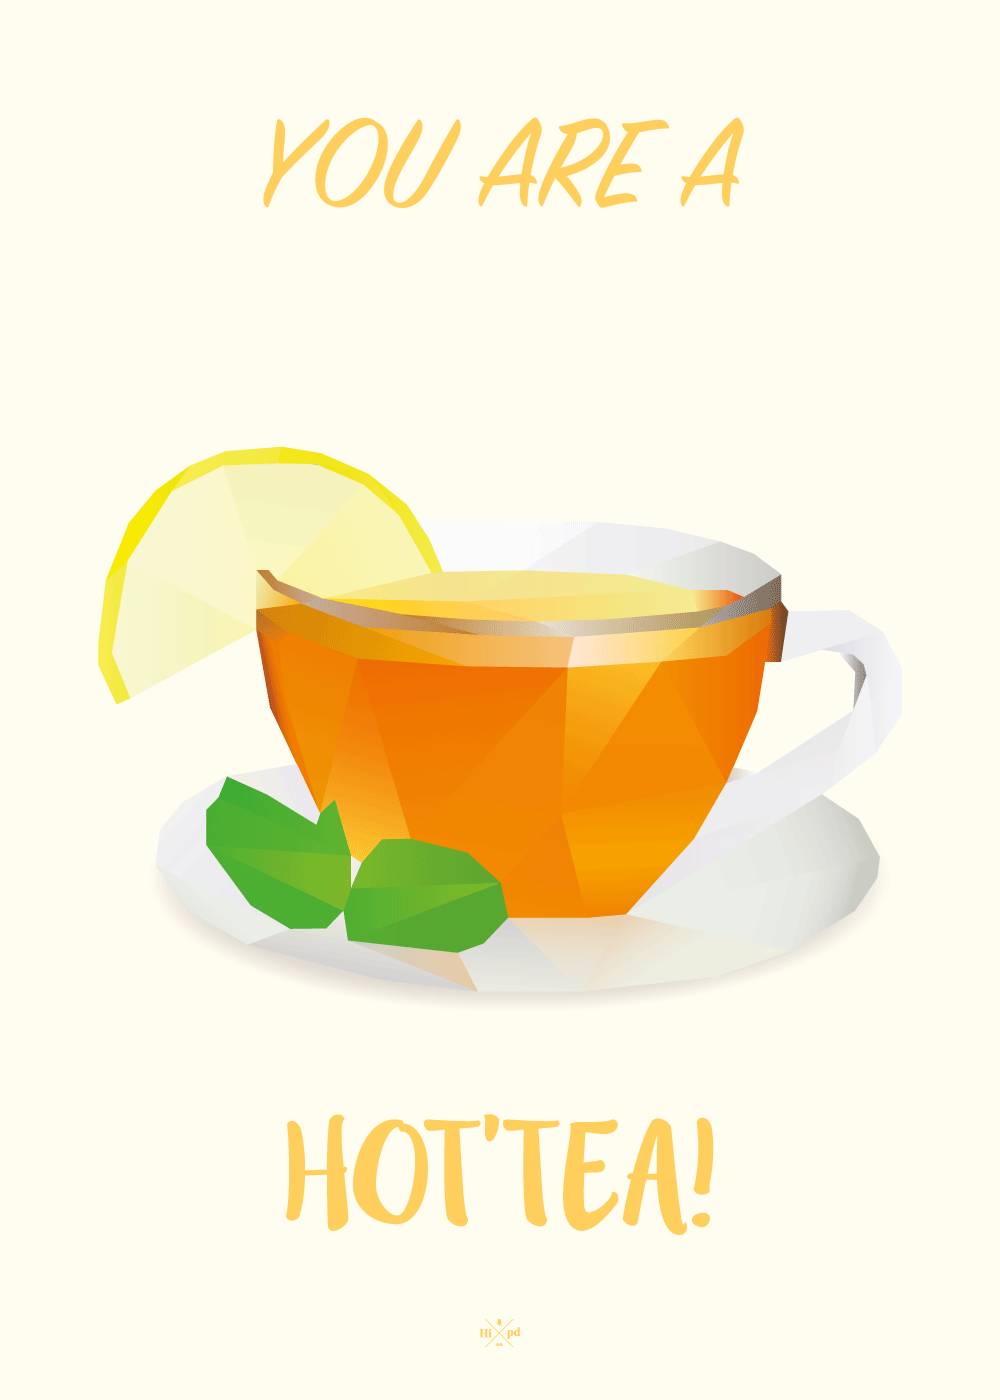 You are a hot'tea